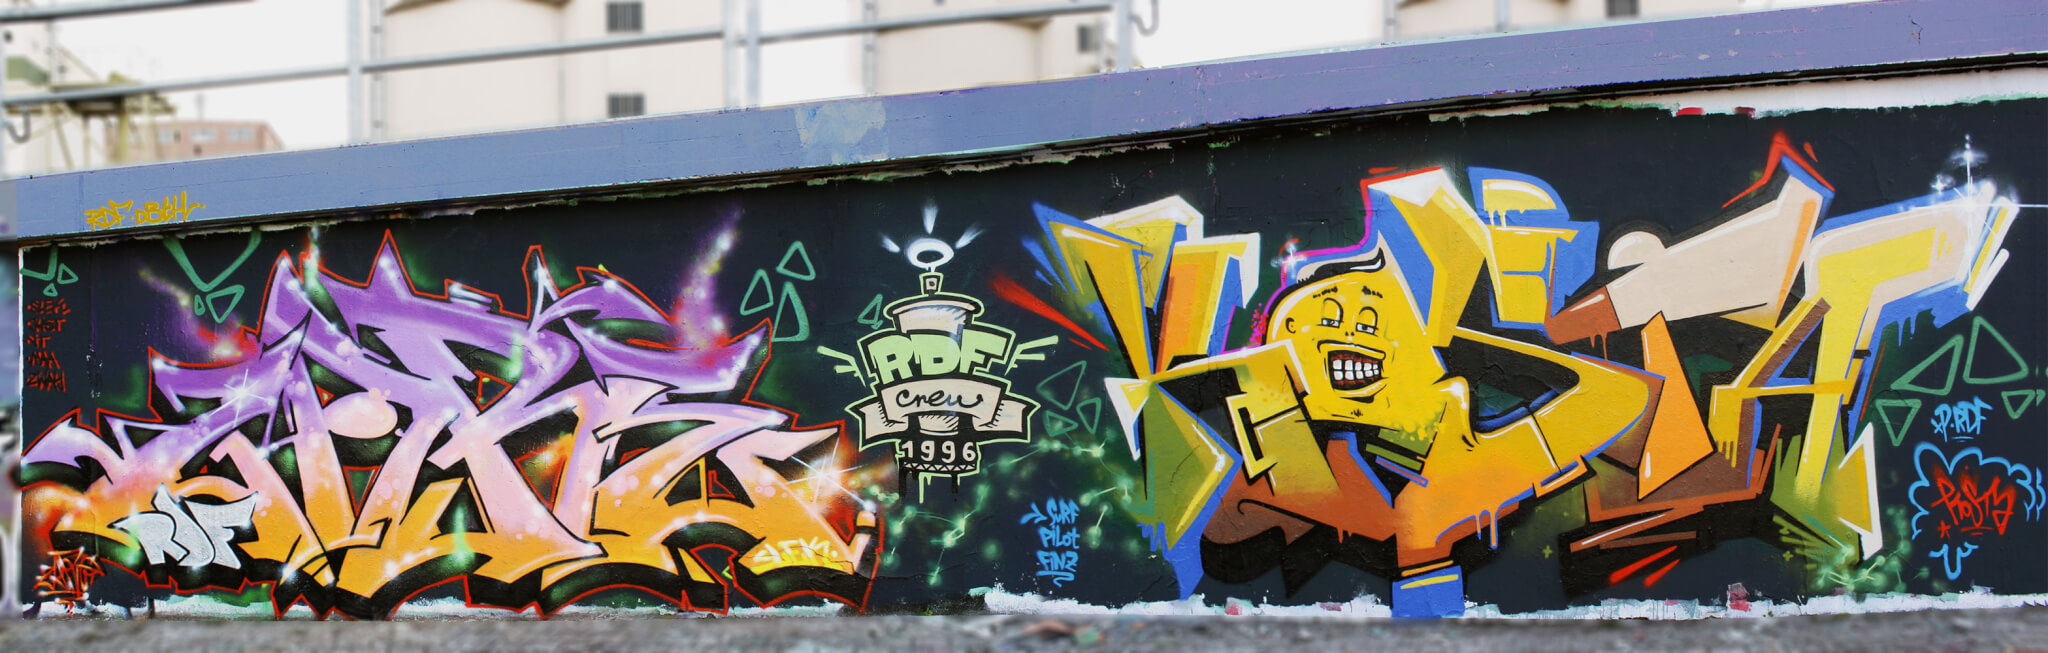 Graffiti in Erfurt by Kosta an Zare 2014